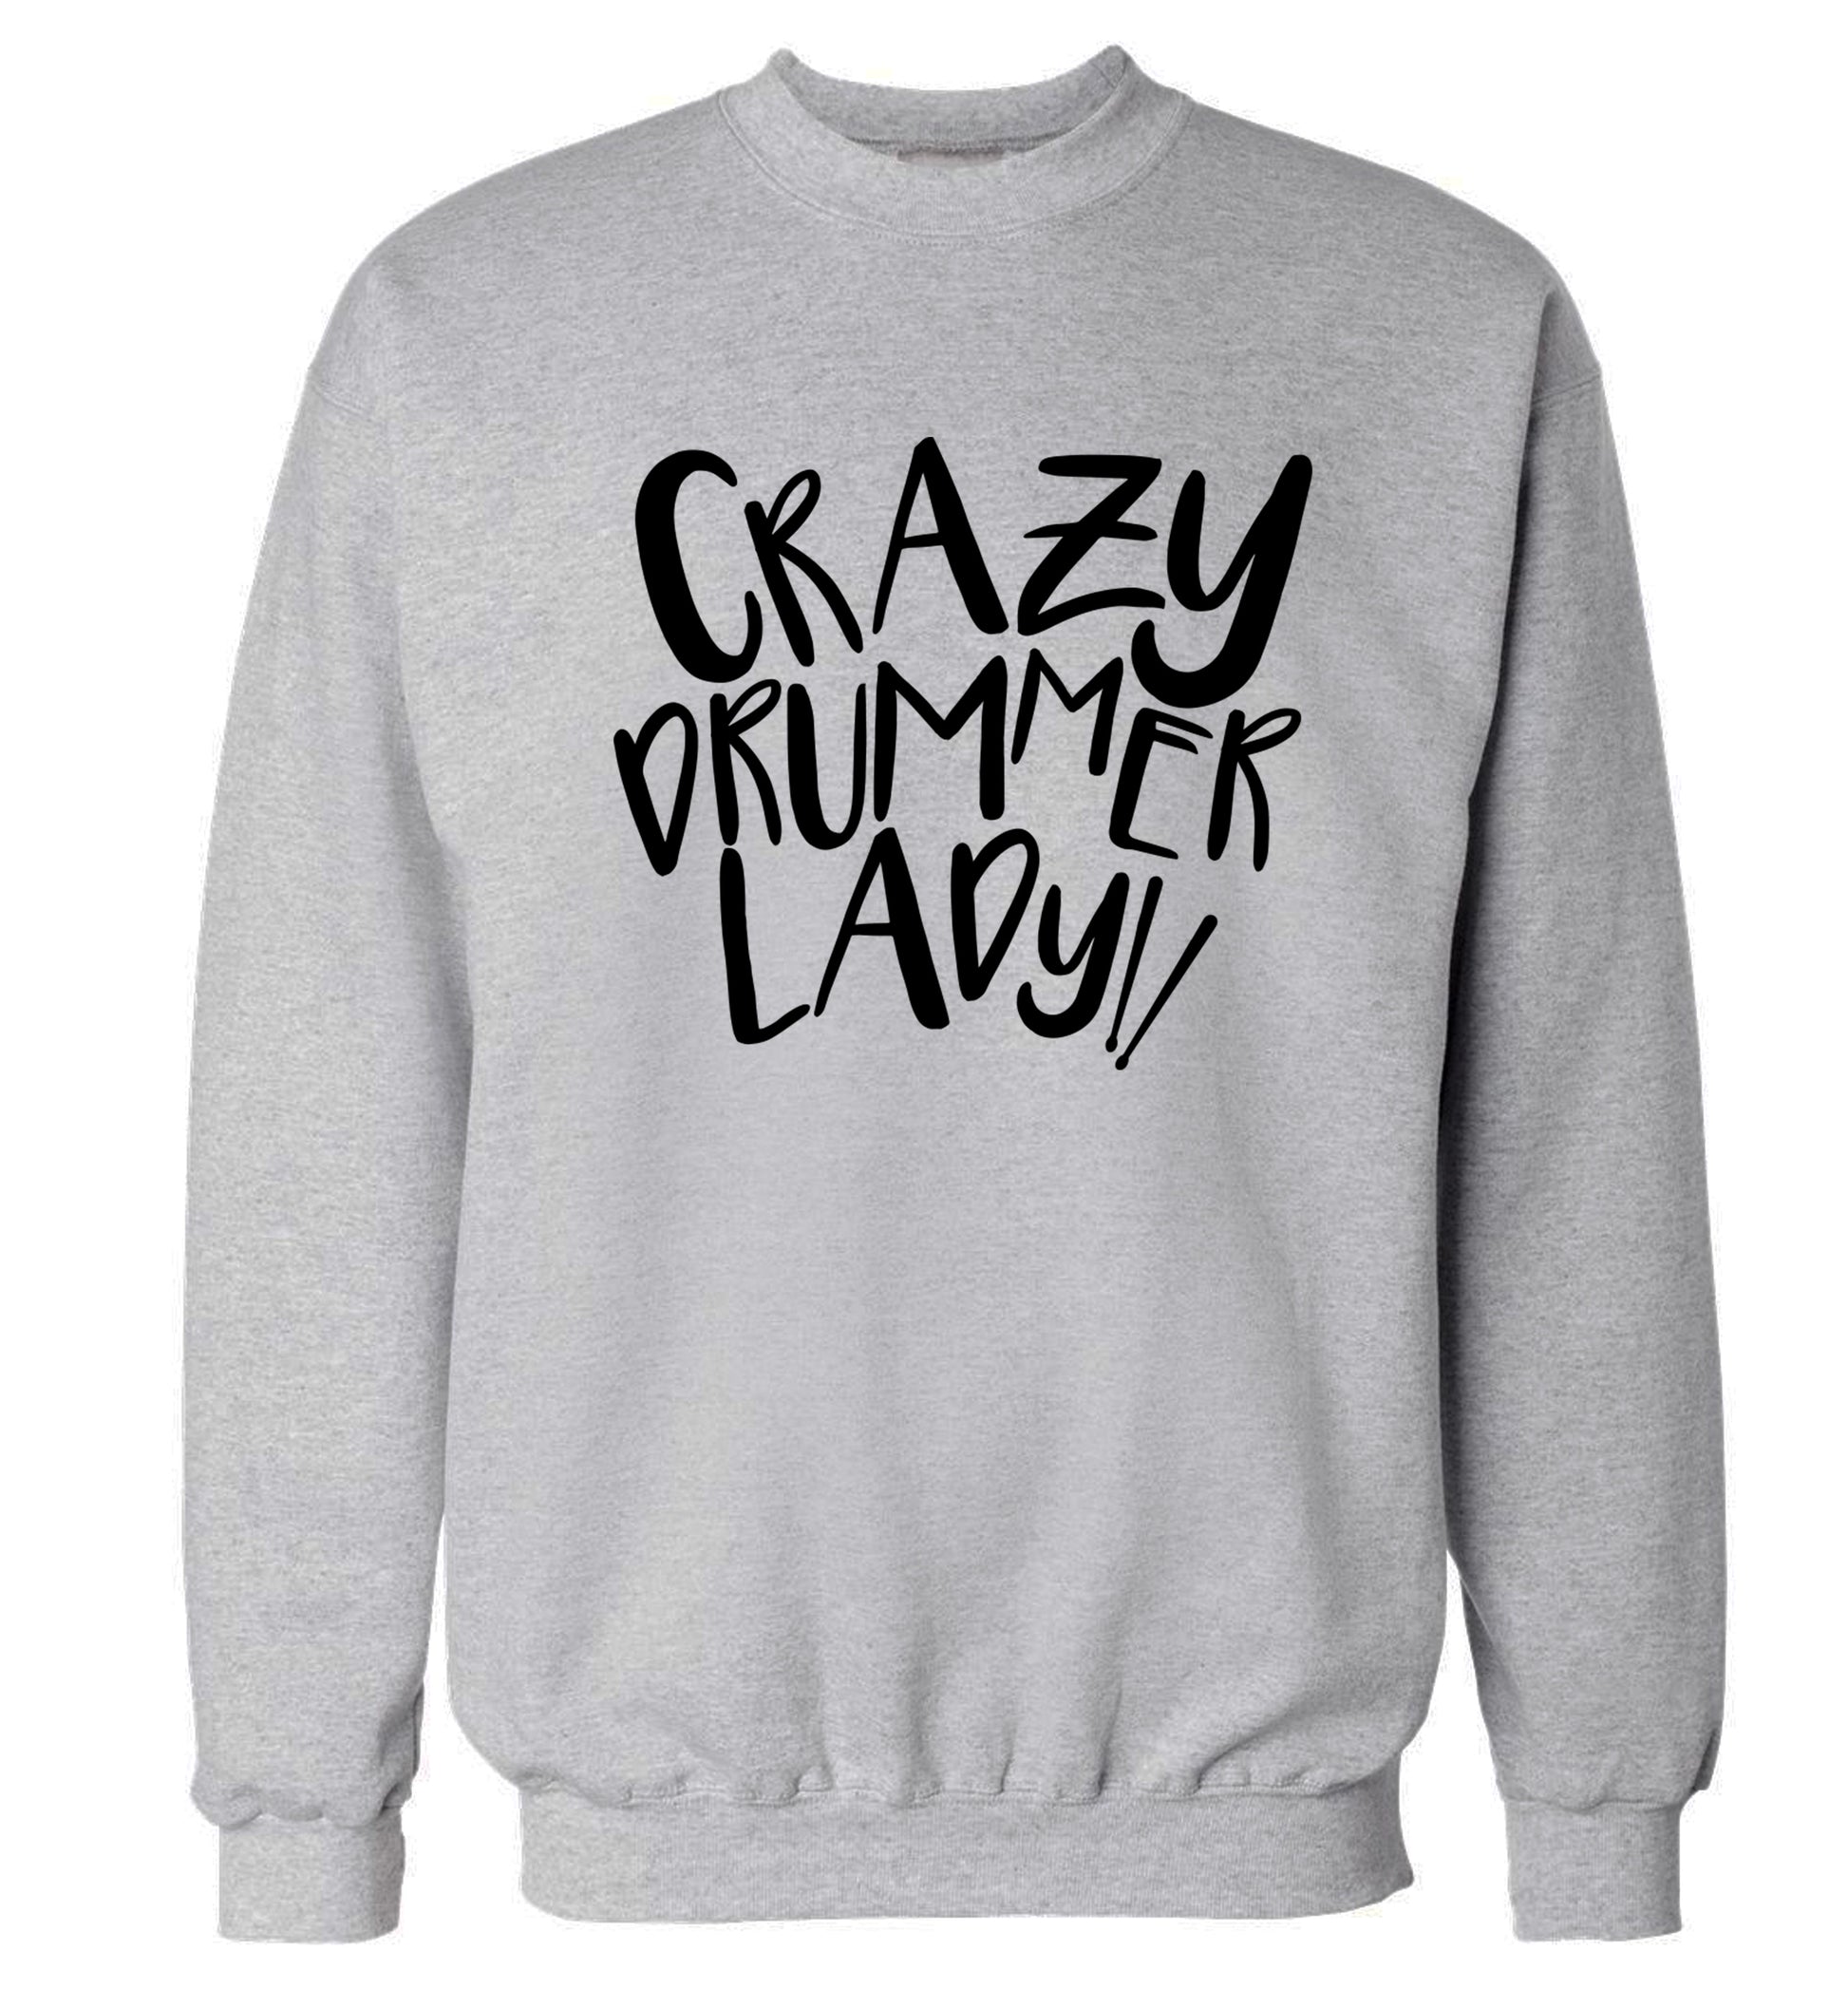 Crazy drummer lady Adult's unisex grey Sweater 2XL